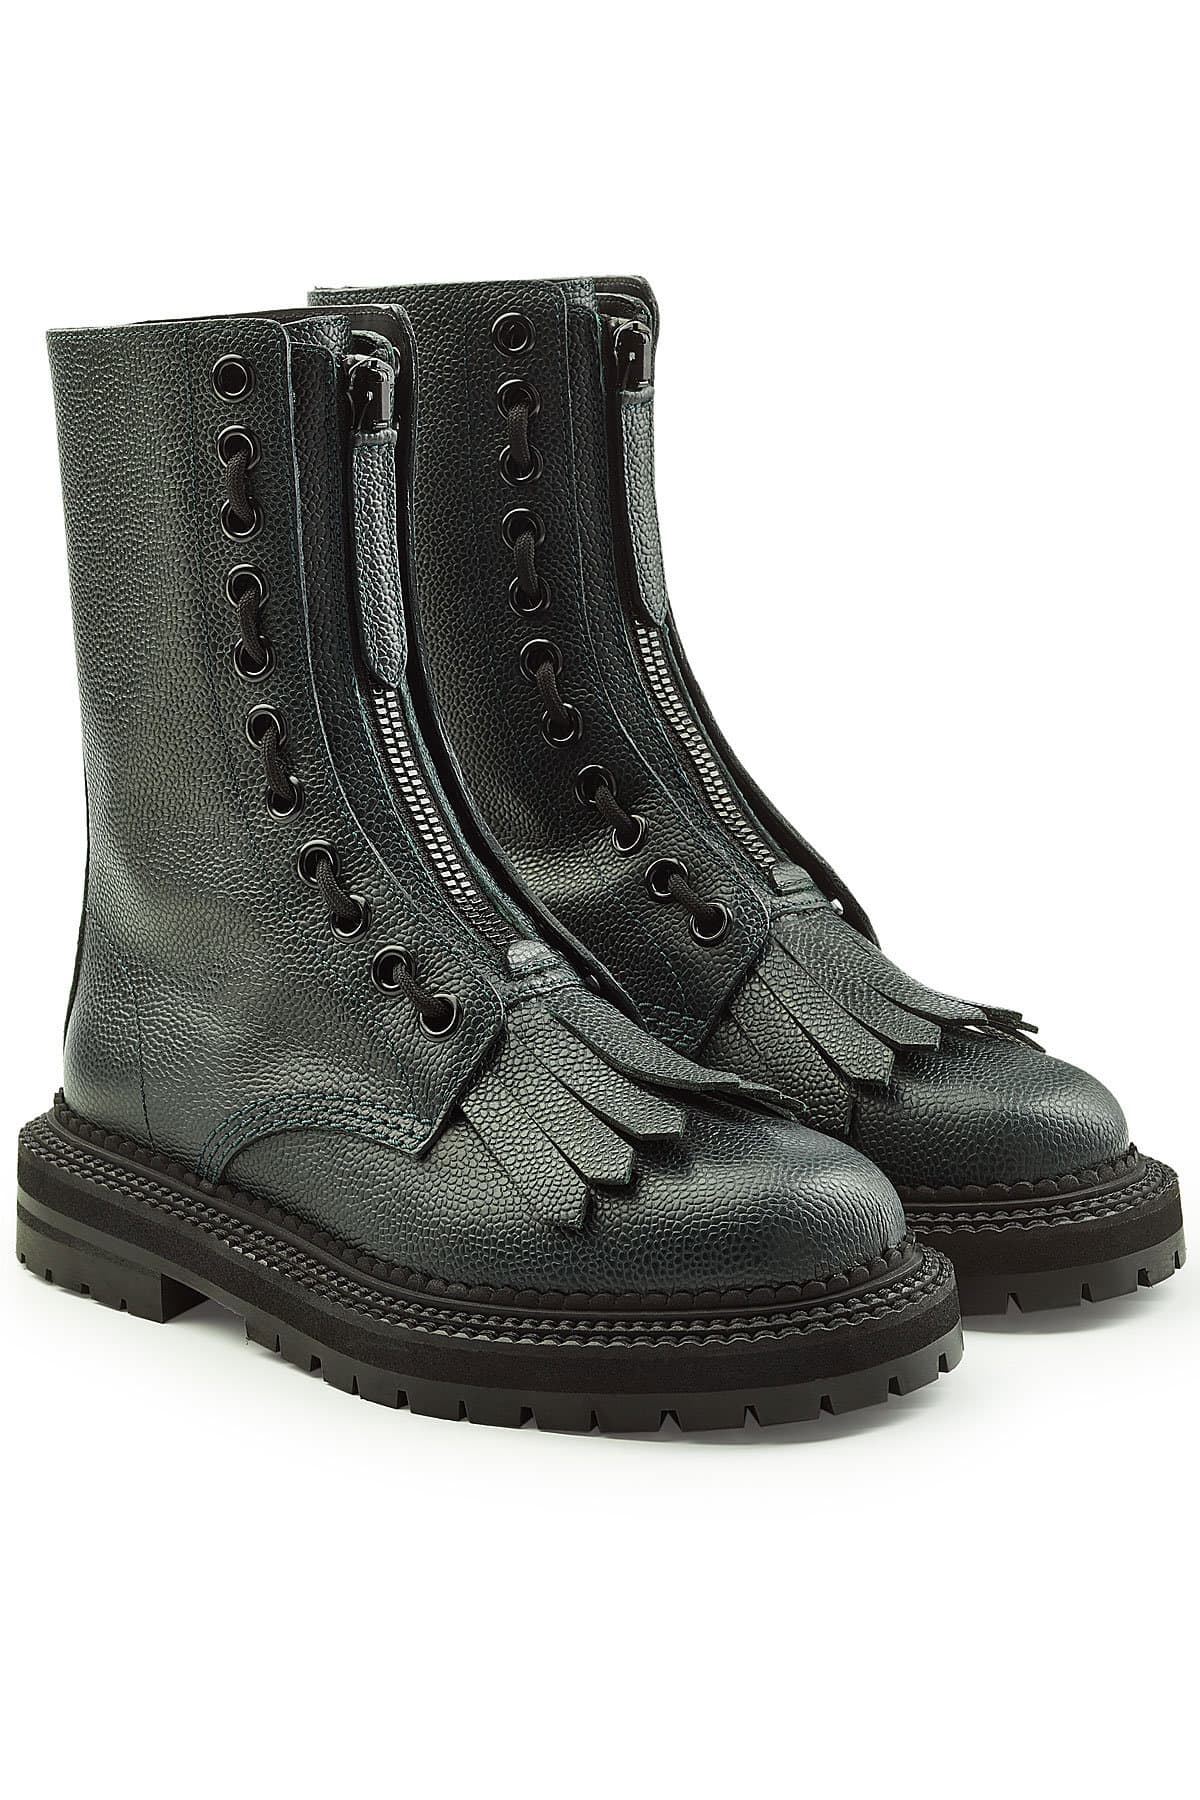 Burberry - Leather Kiltie Boots